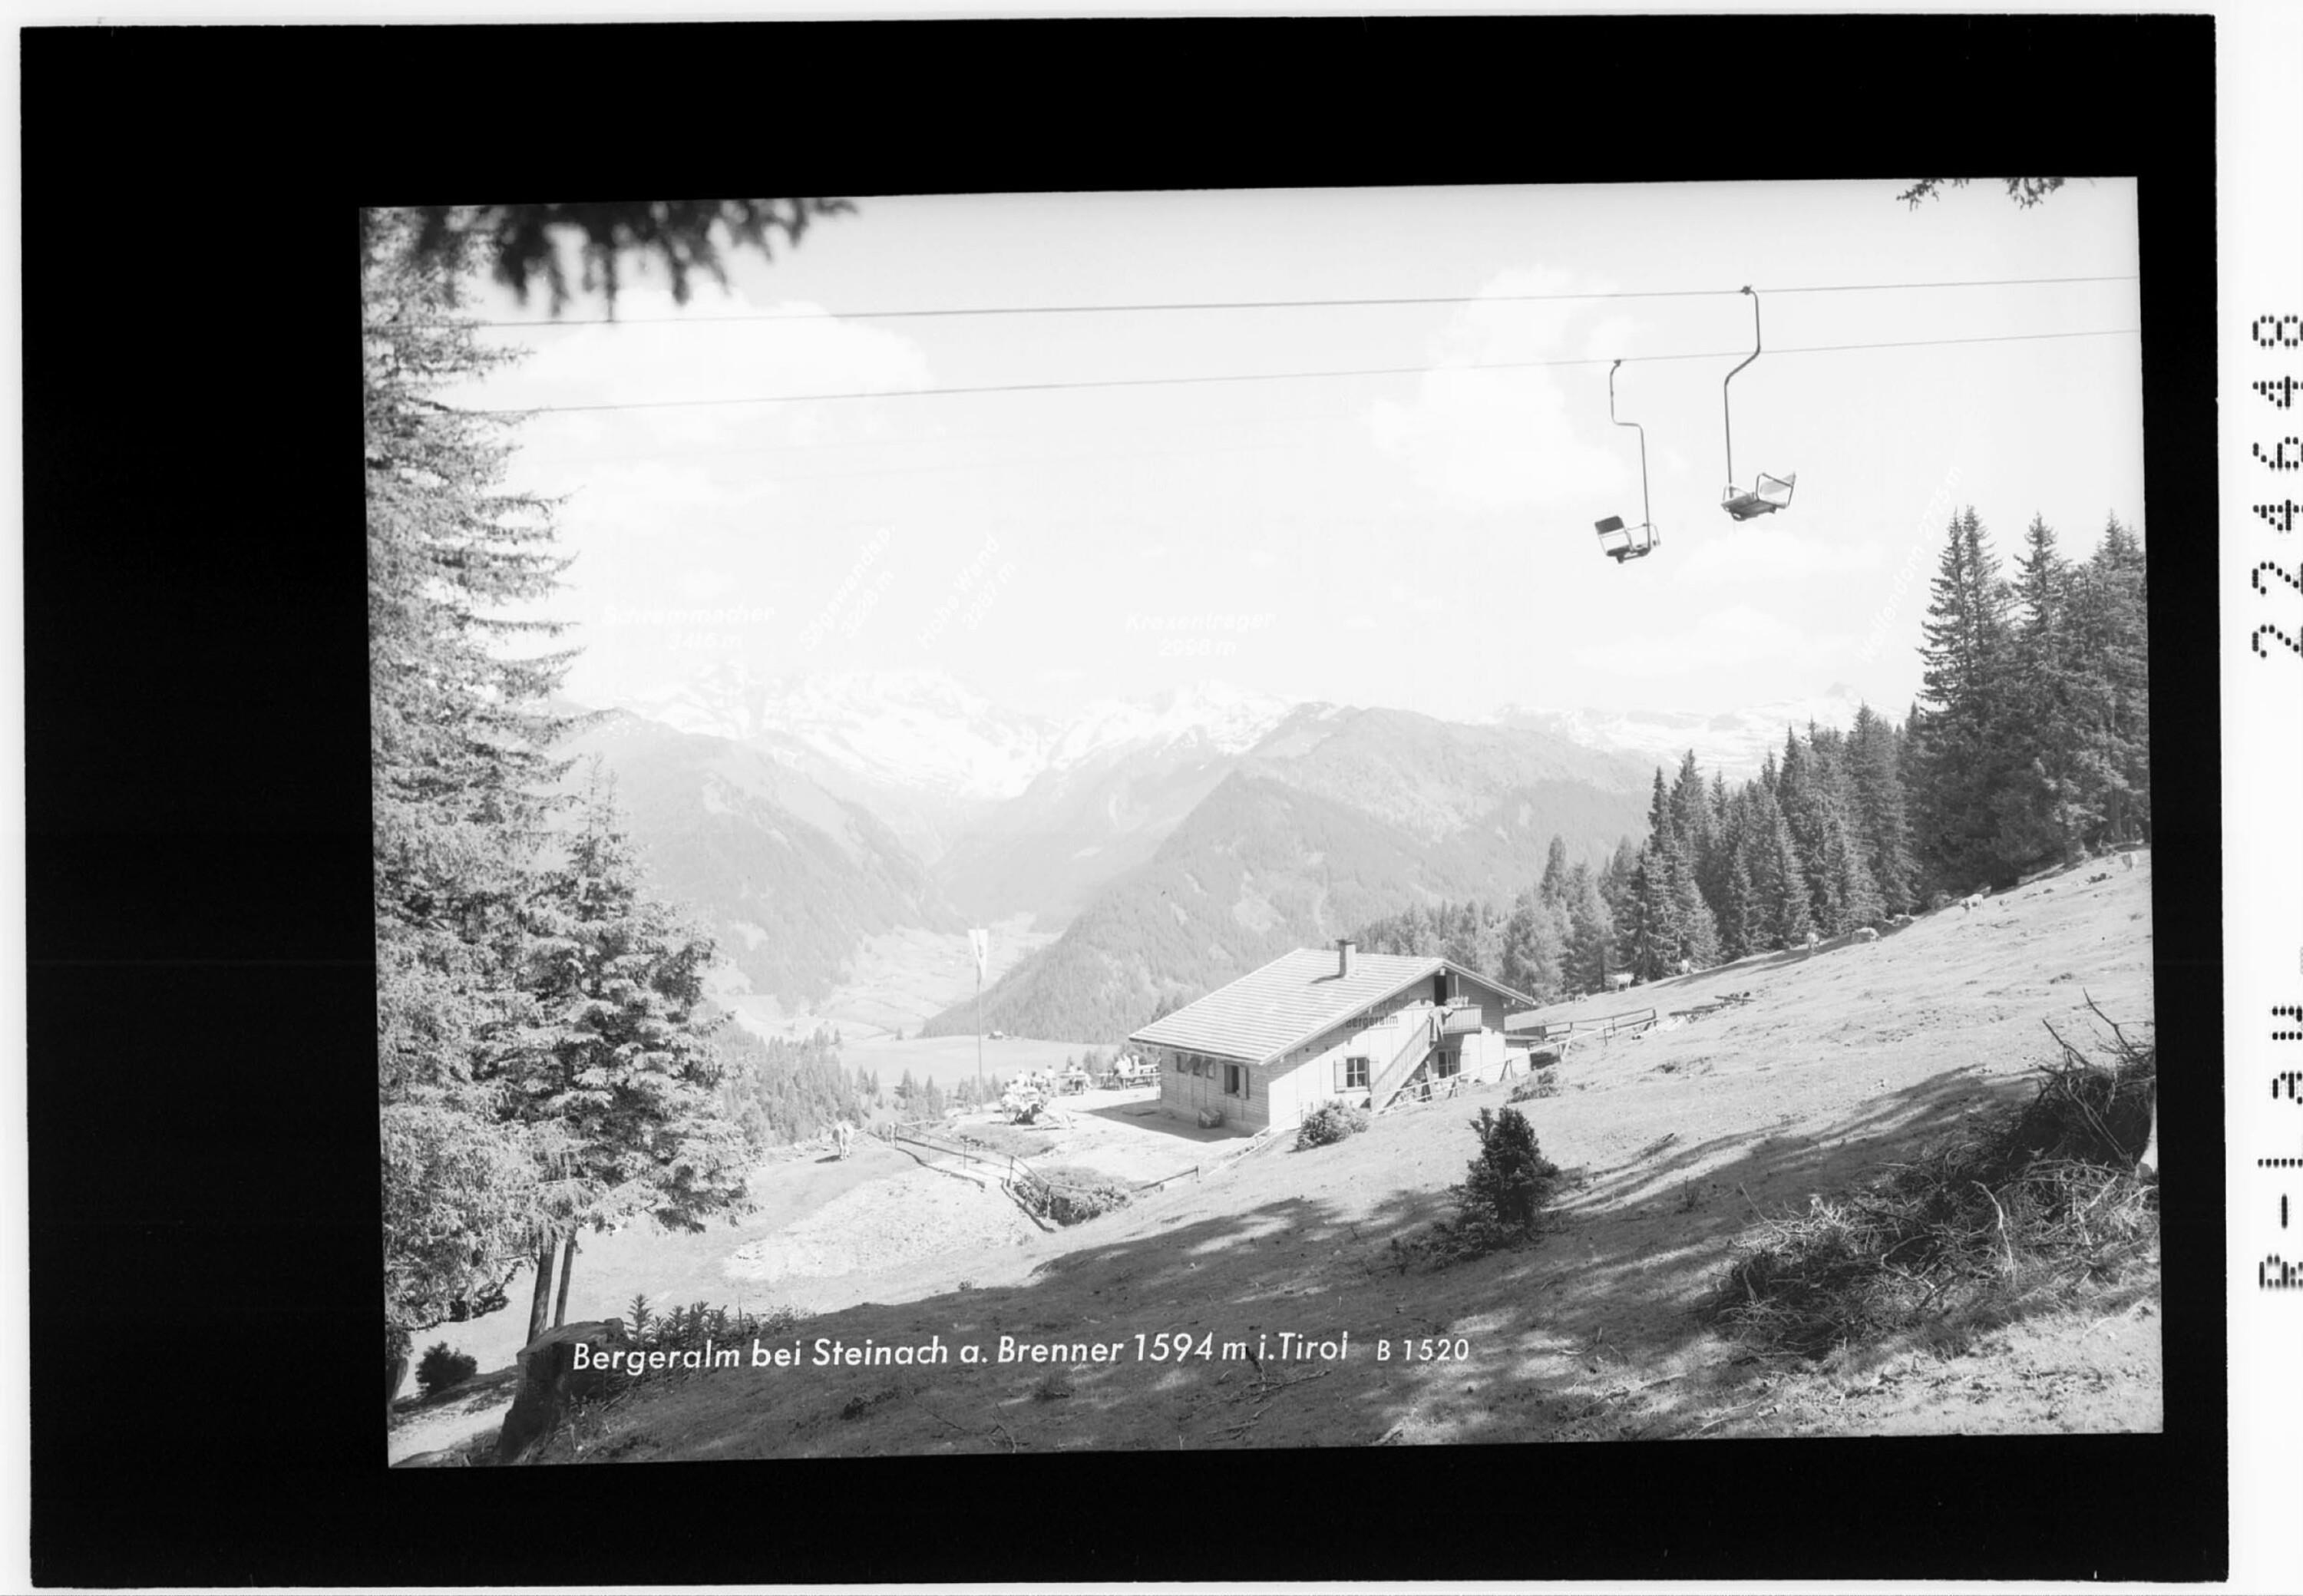 Bergeralm bei Steinach am Brenner 1594 m in Tirol></div>


    <hr>
    <div class=